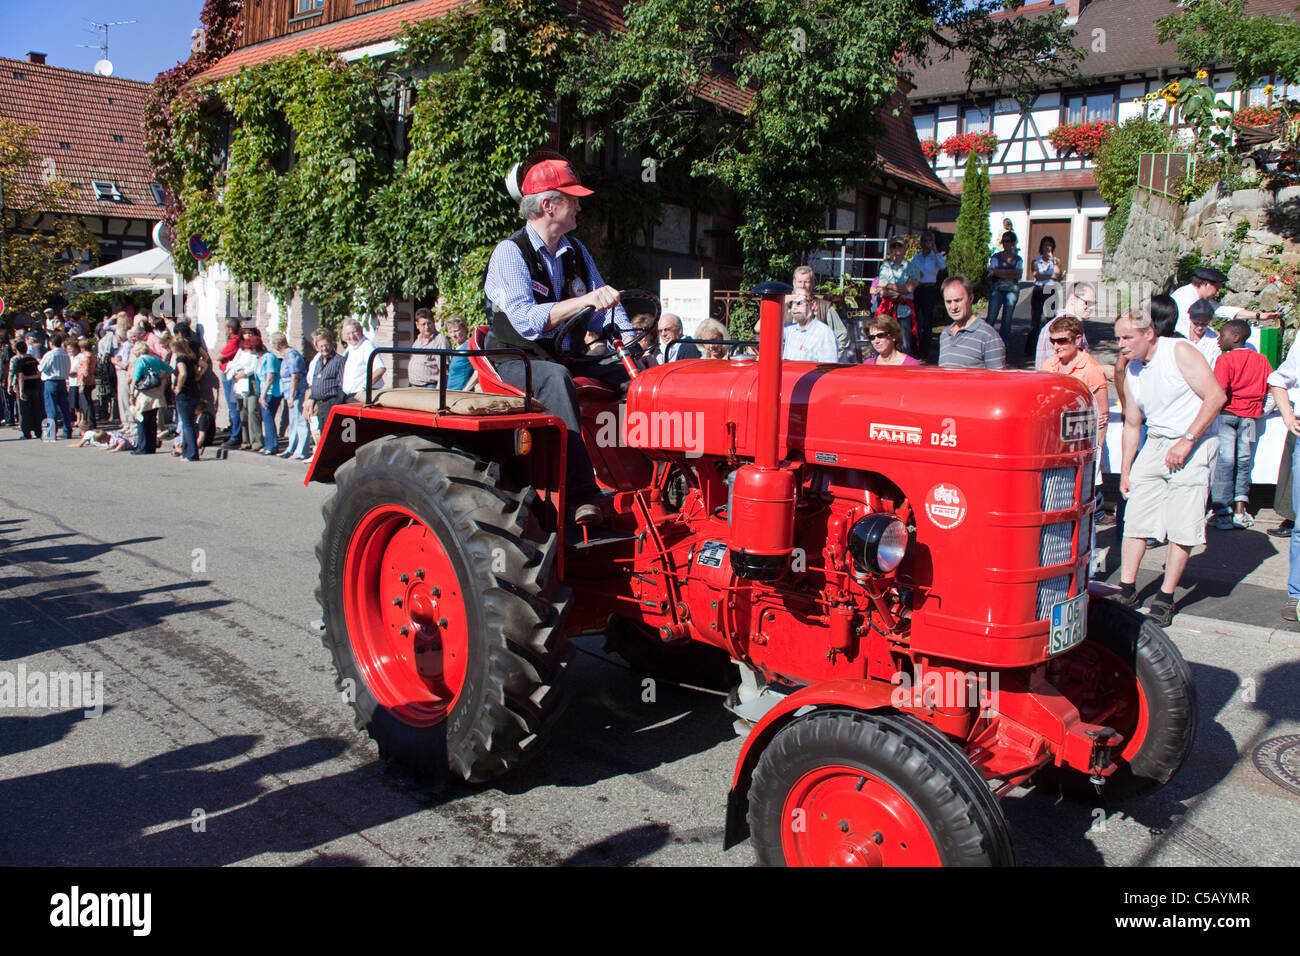 Fahr Oldtimer Traktor, Festumzug Erntedankfest, Weinfest, Tractor oldtimer Harvest festival Thanksgiving Day Black forest Stock Photo